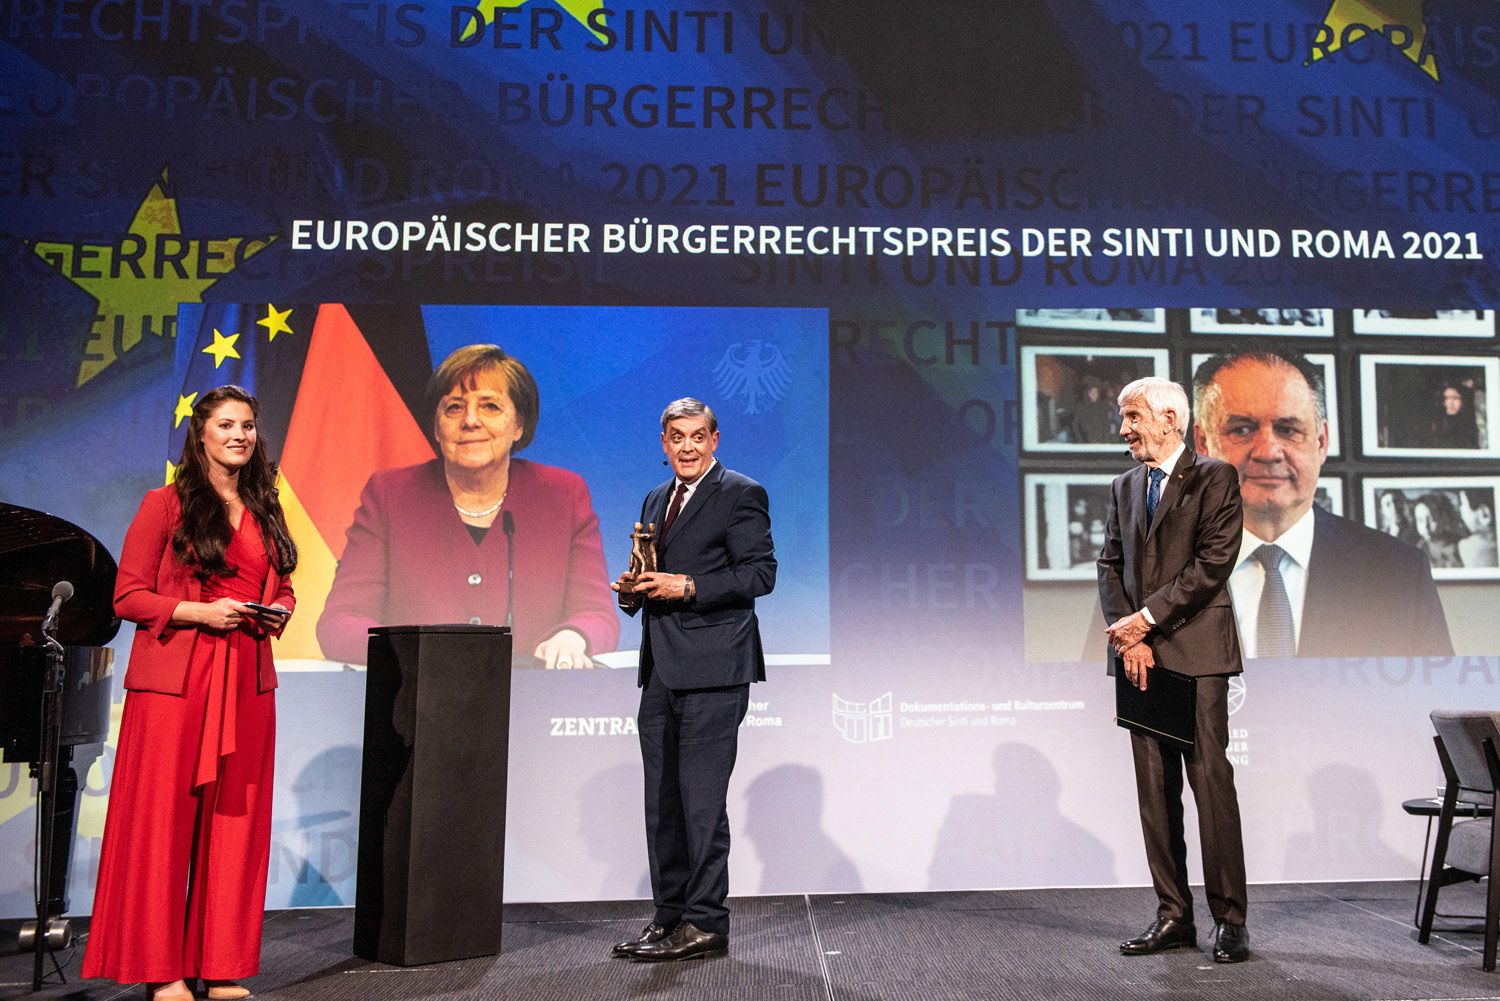 Eventfotografie Preisverleihung Dr Merkel